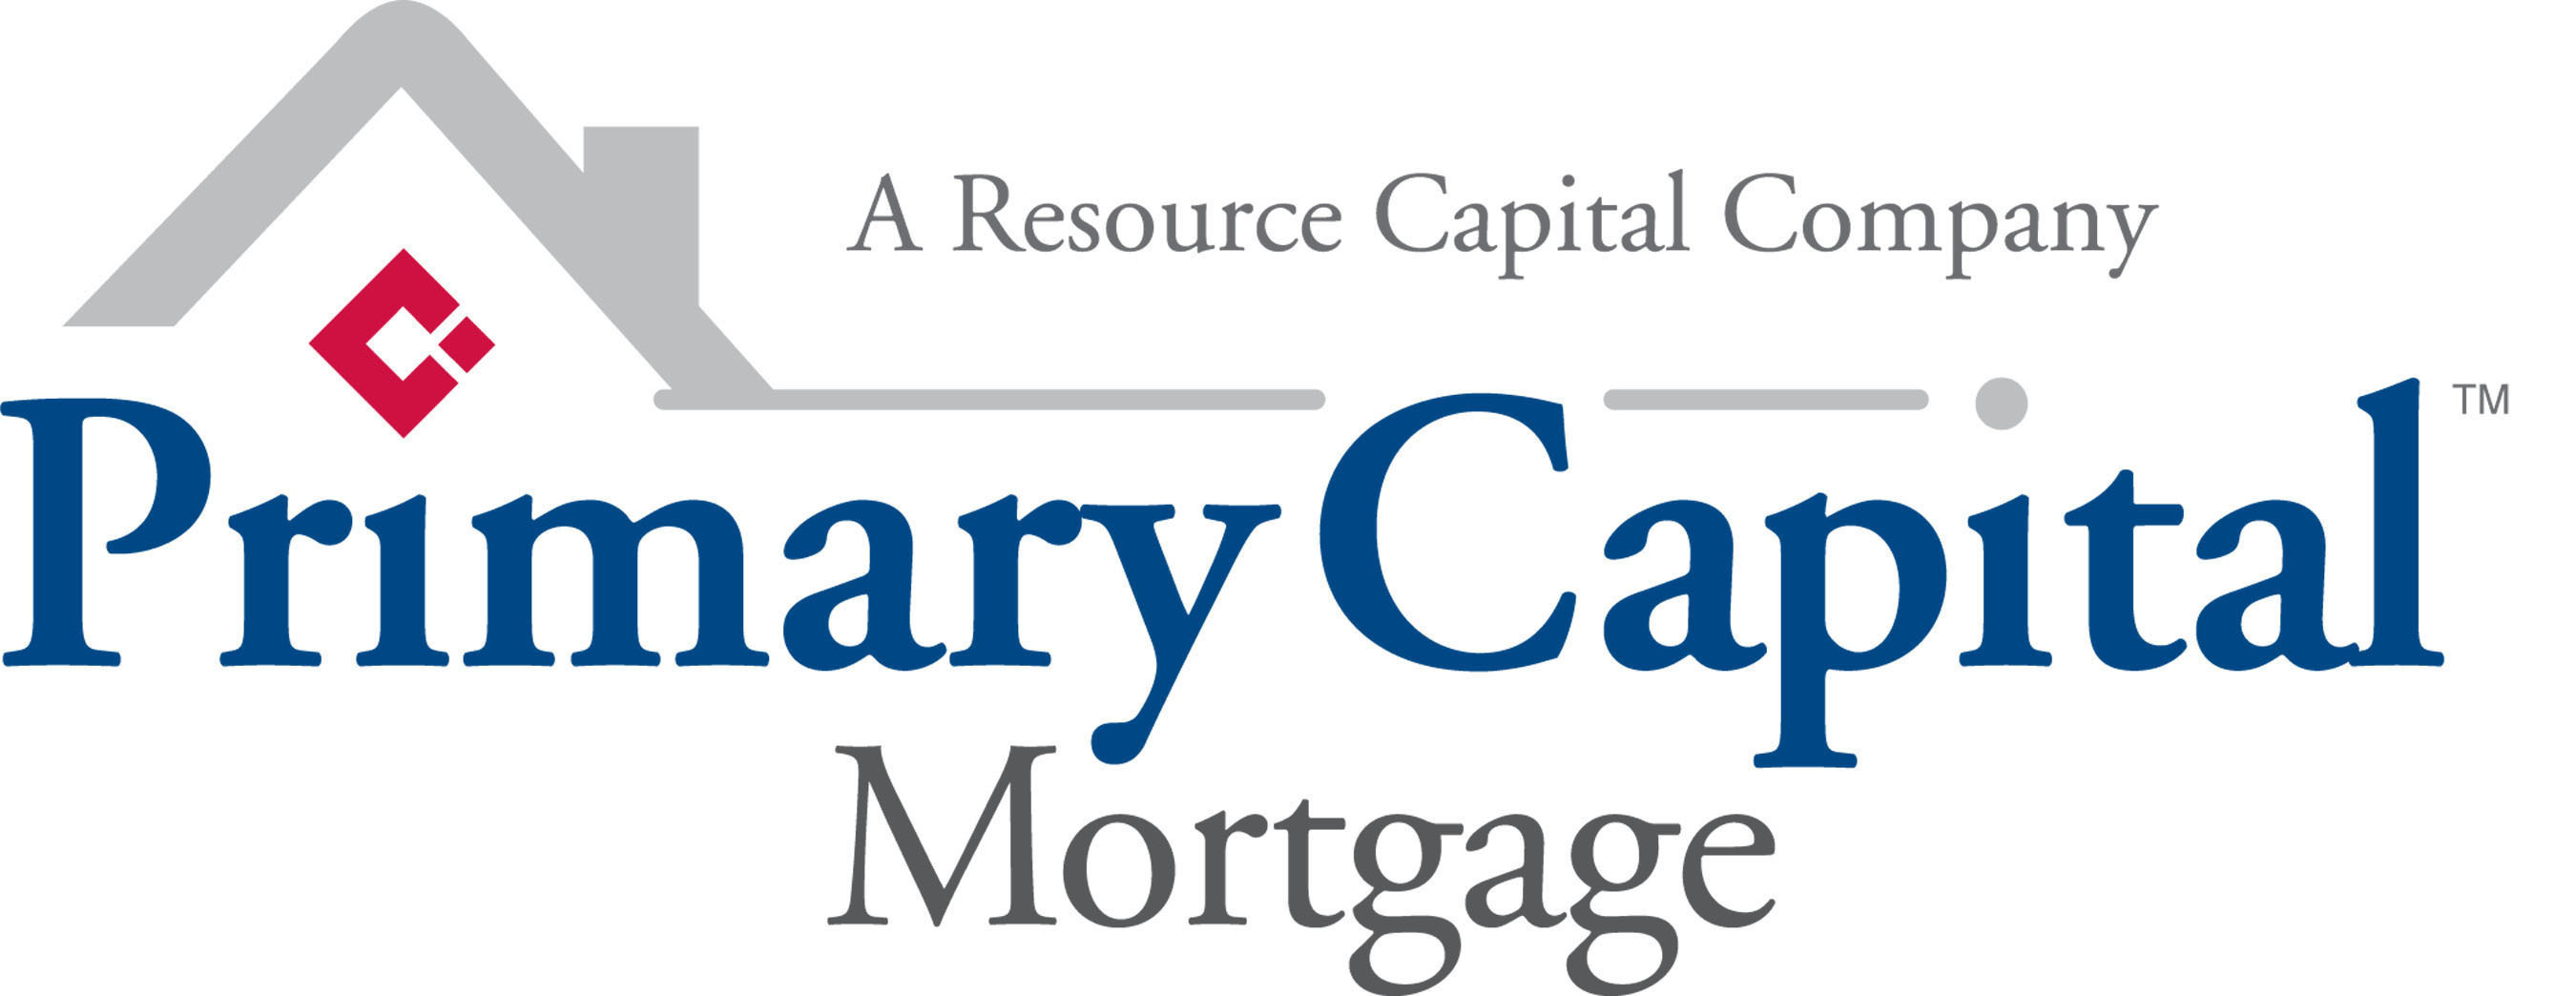 Primary Capital Mortgage. (PRNewsFoto/Primary Capital Mortgage)